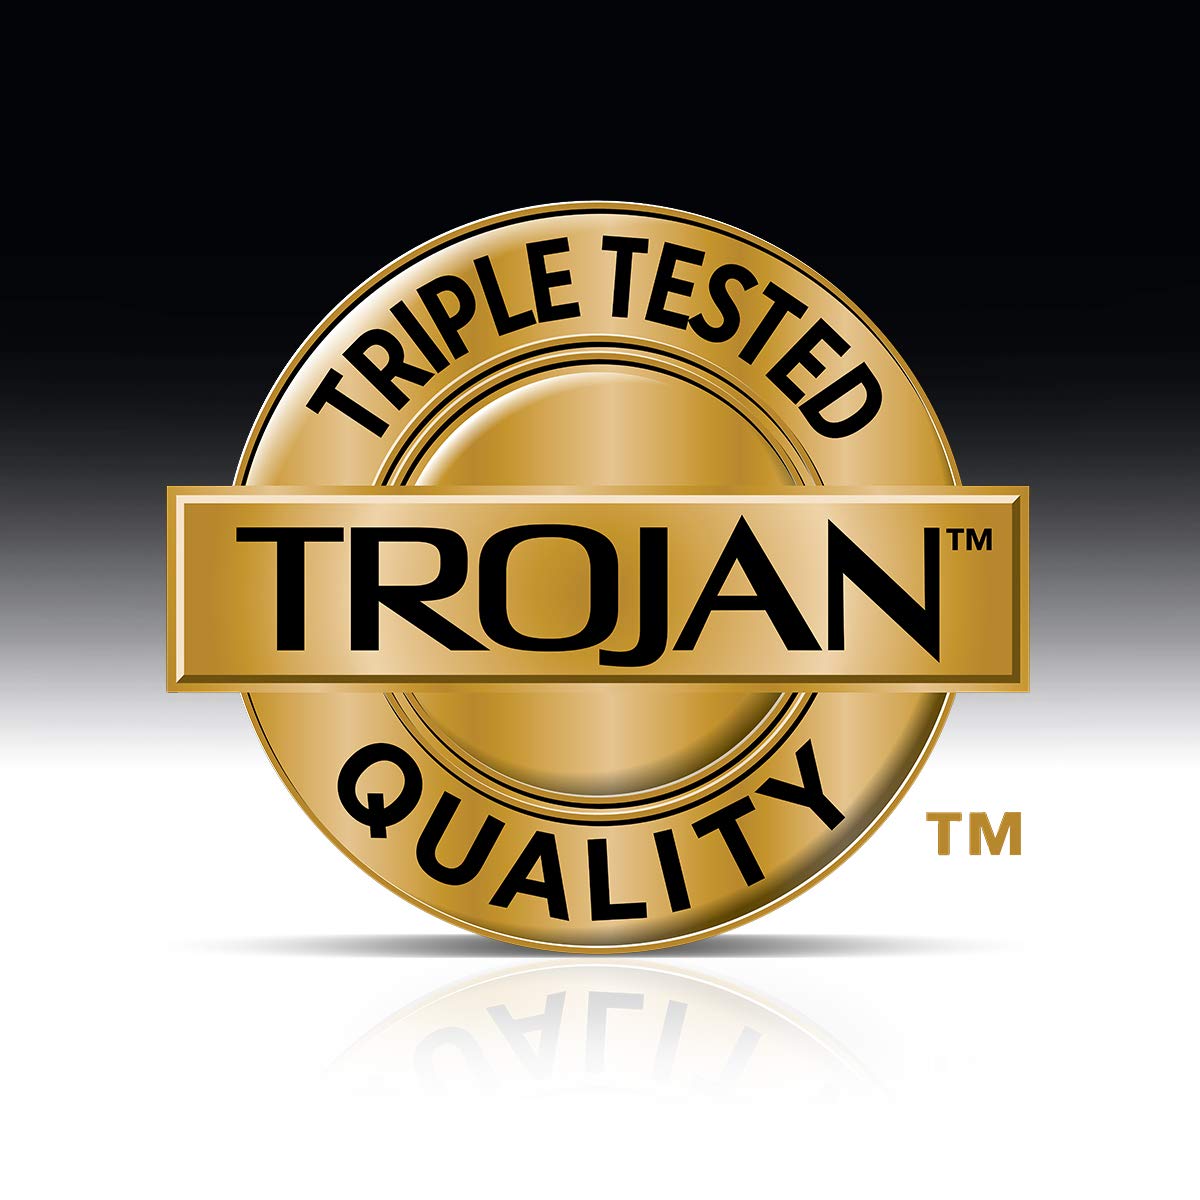 TROJAN EXTENDED PLEASURE Climax Control Extended Pleasure Condoms, 12 Count